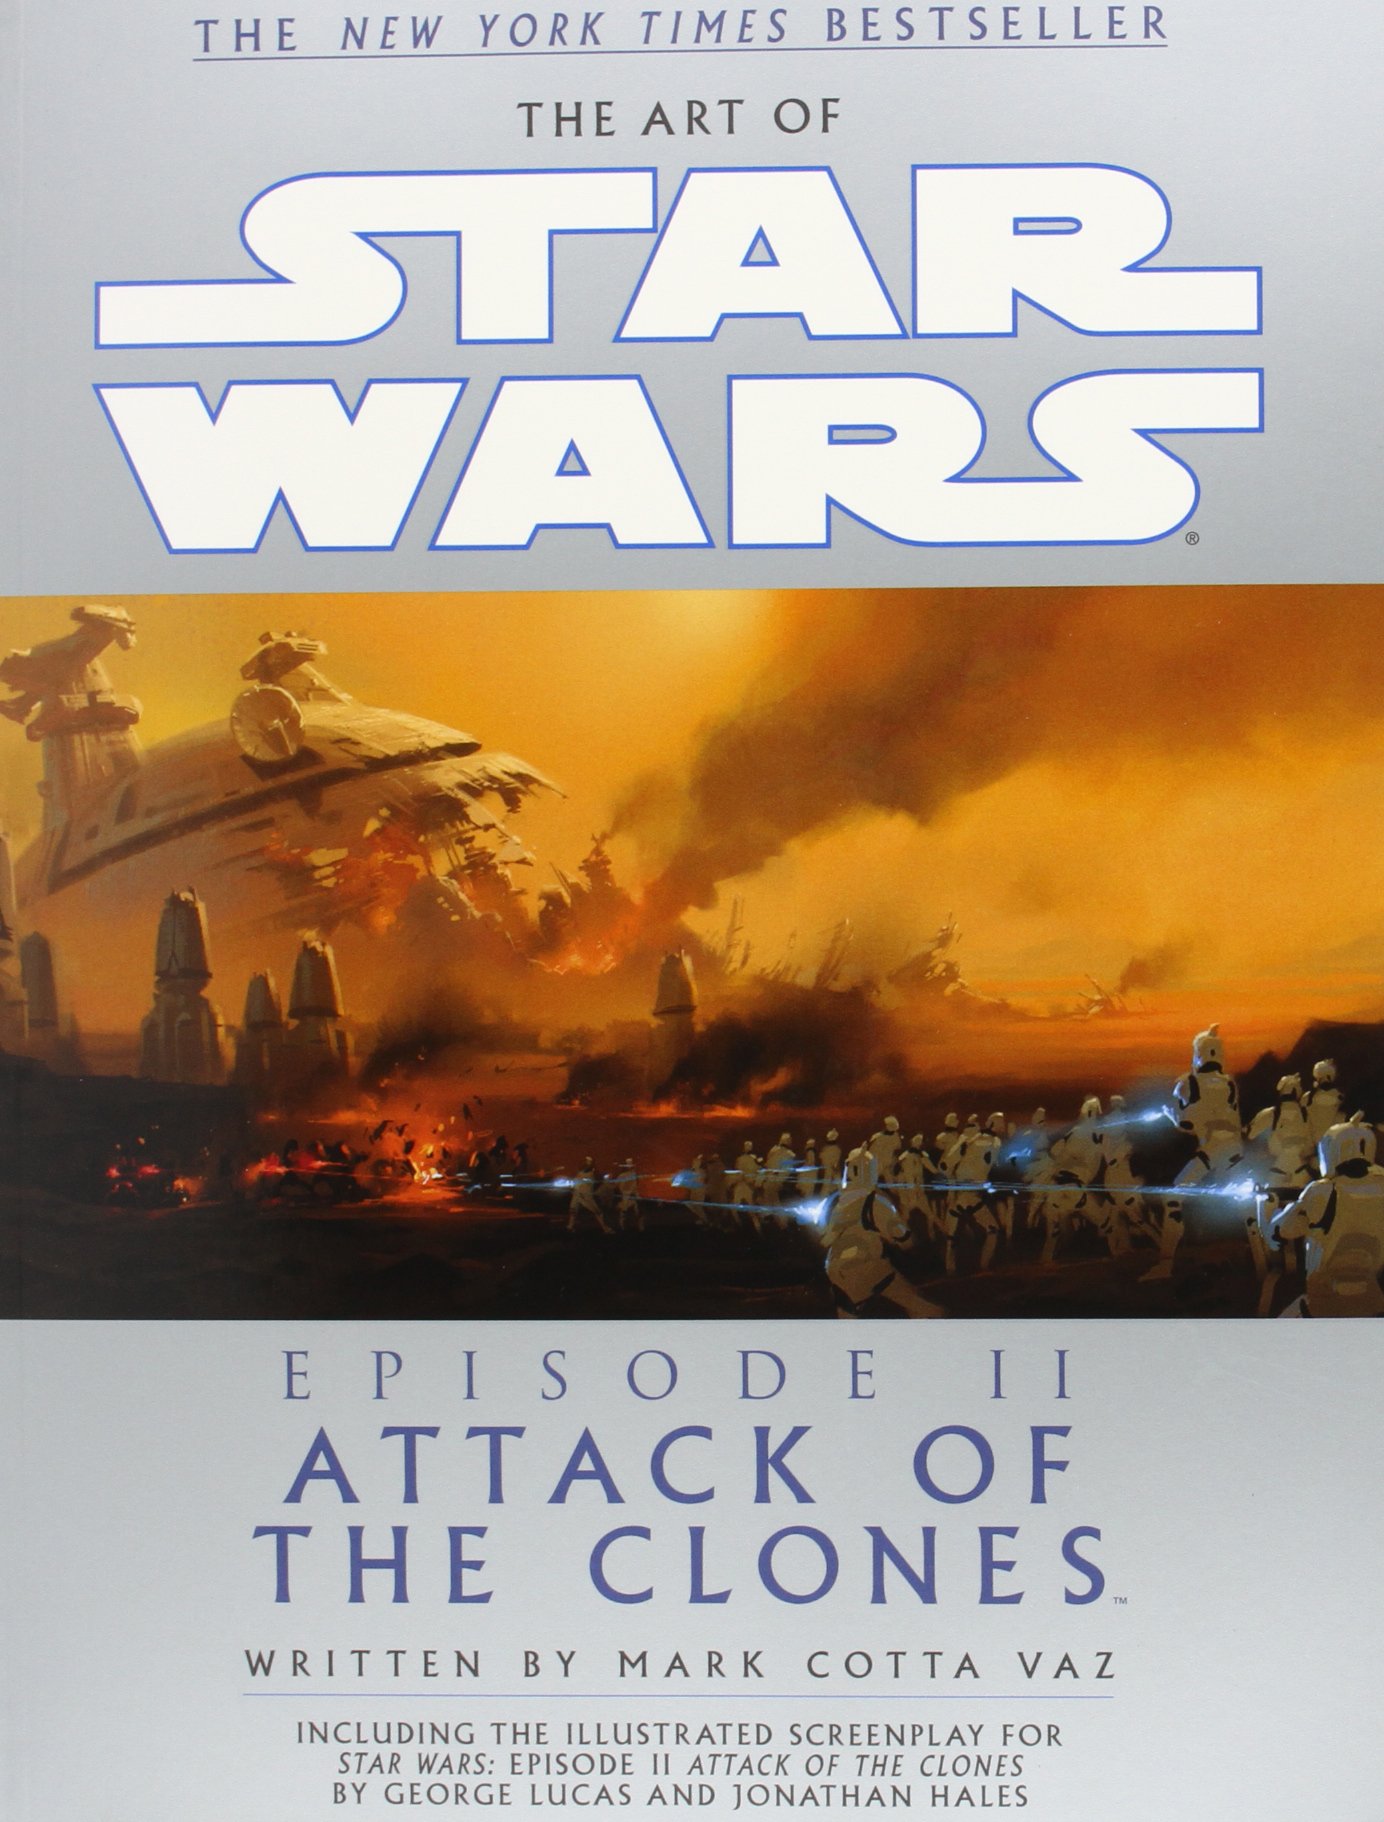 star wars ii attack of the clones album cover